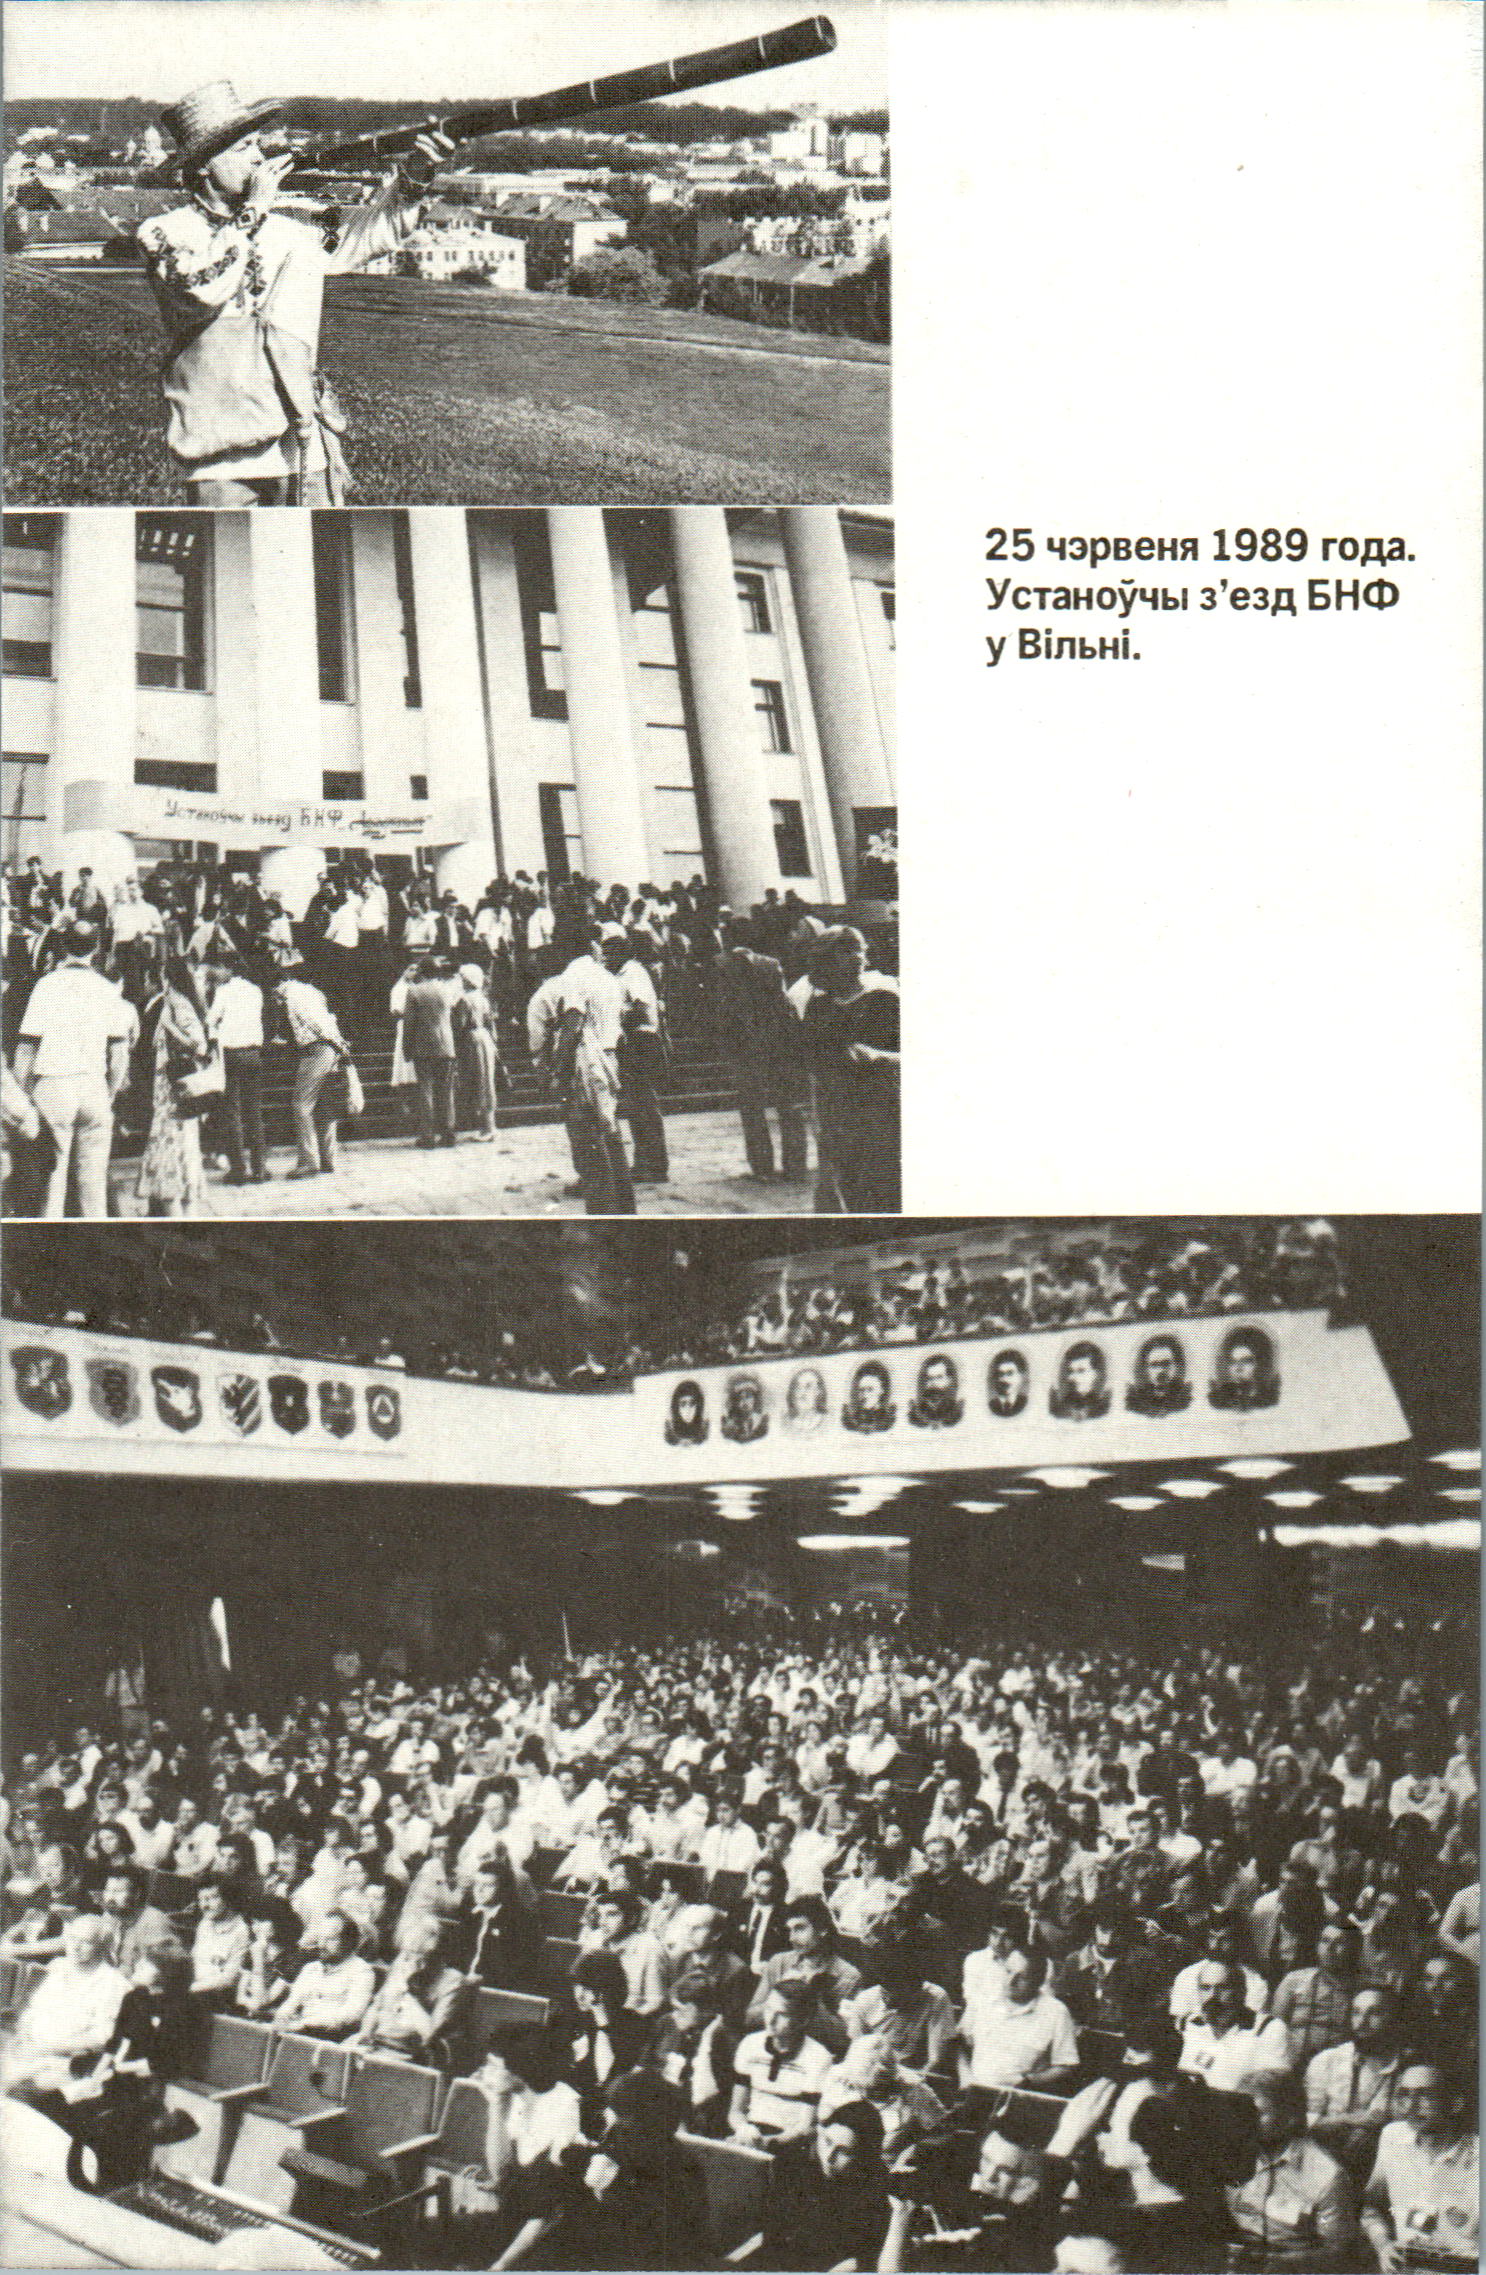 25 чэрвеня 1989 года.
Устаноўчы з’езд БНФ
у Вільні.